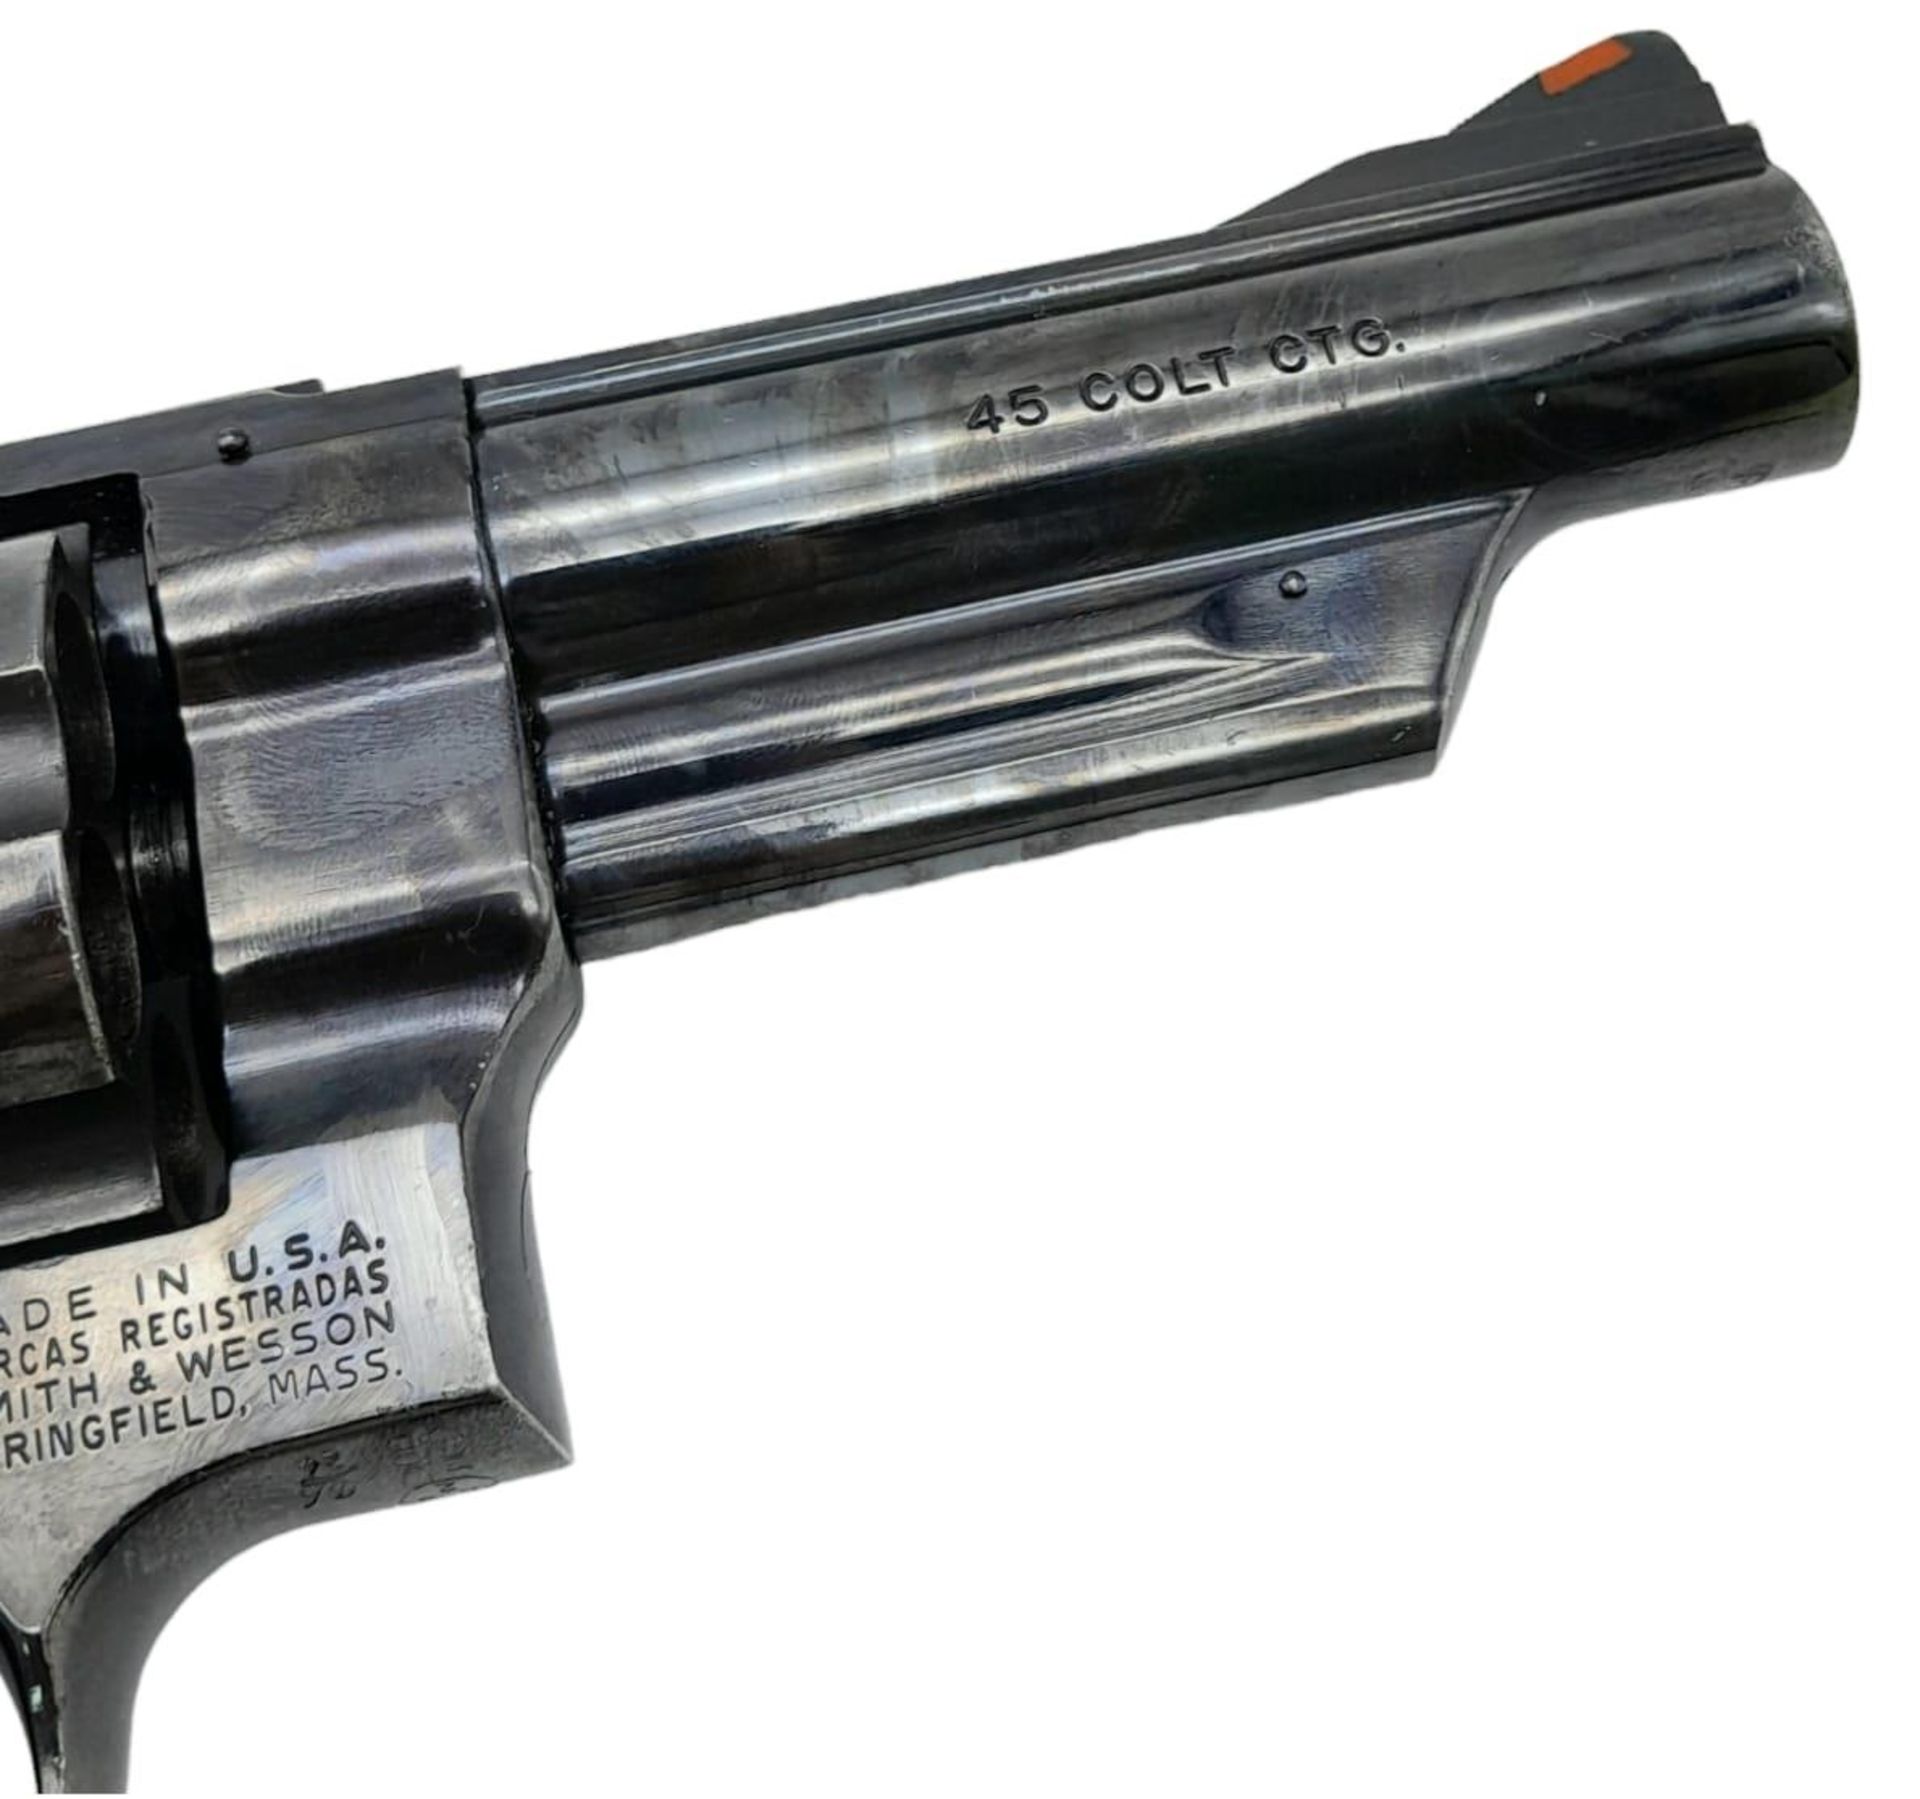 A Smith and Wesson .45 Calibre Revolver. This USA made pistol has a 4 inch barrel with a nice dark - Bild 9 aus 17